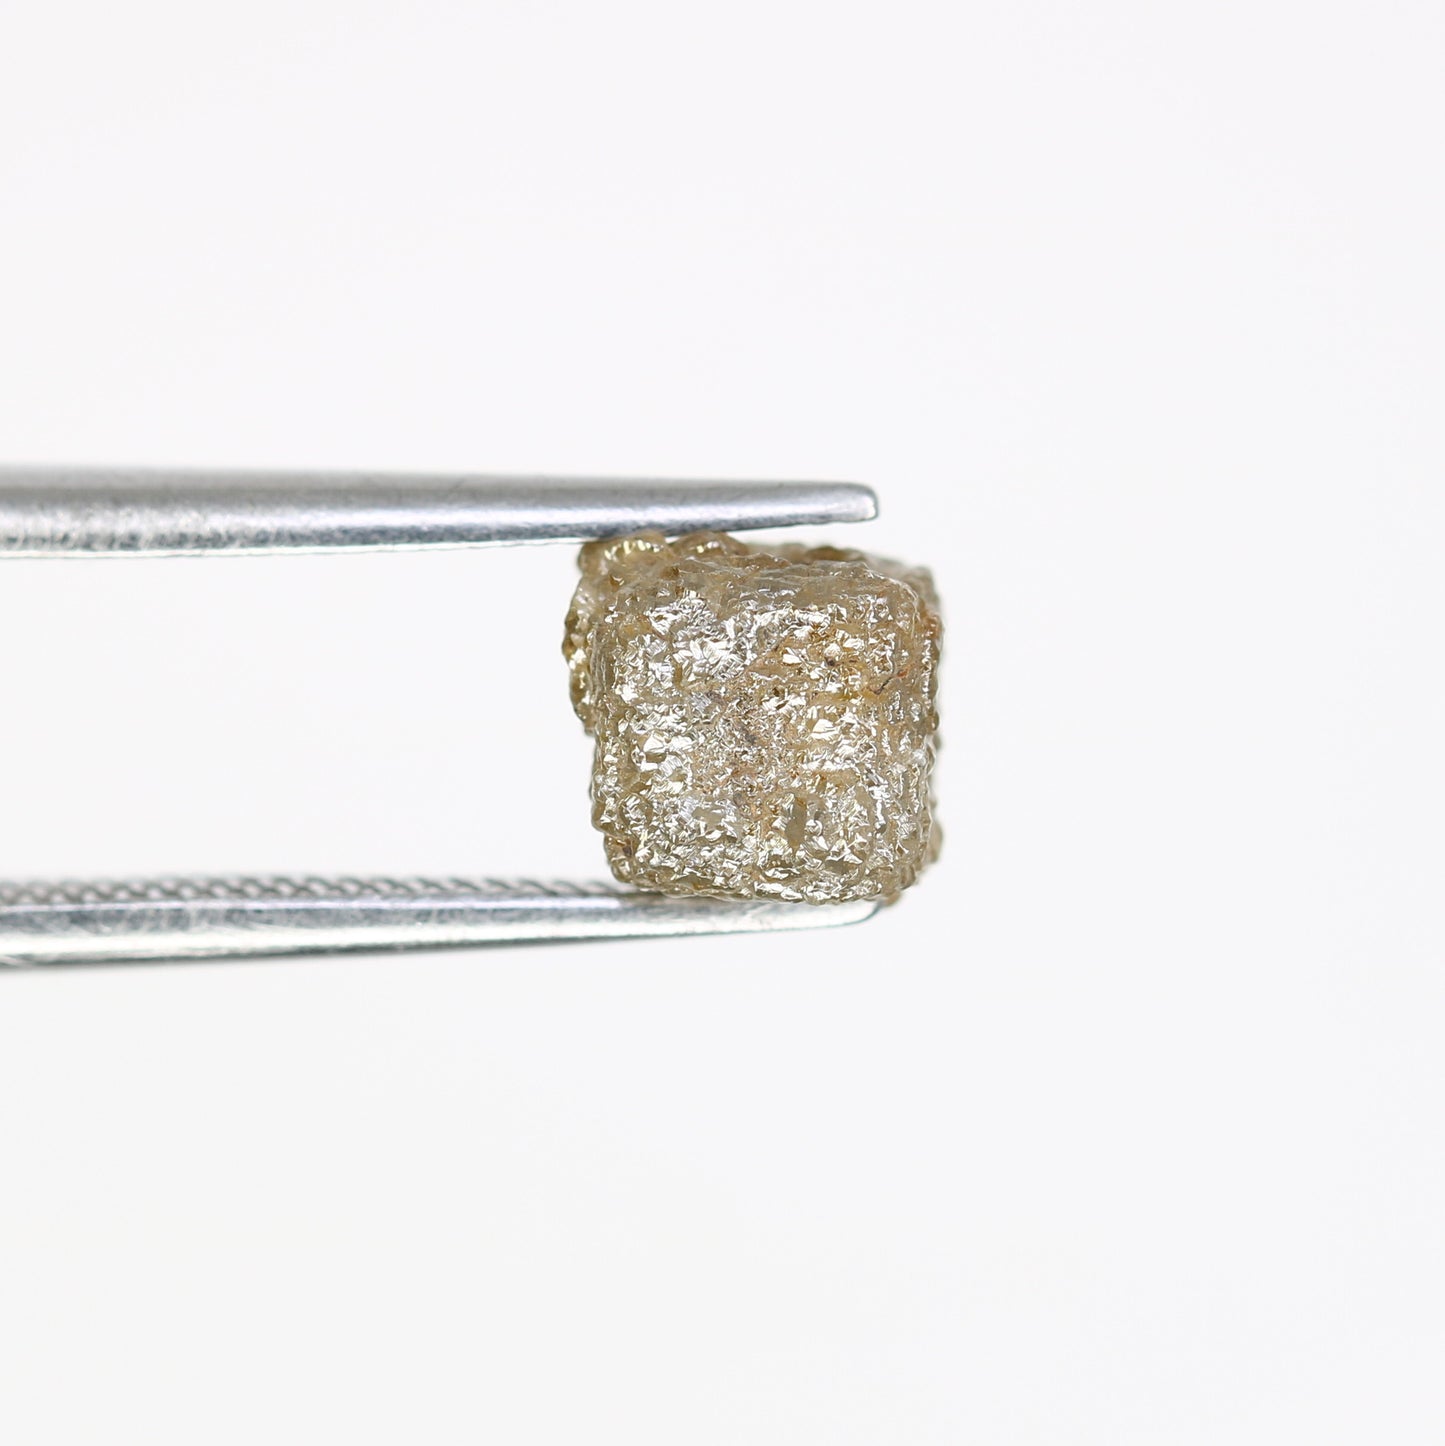 2.29 Carat Natural Grey Color Congo Cube Shape Raw Diamond For Wedding Ring